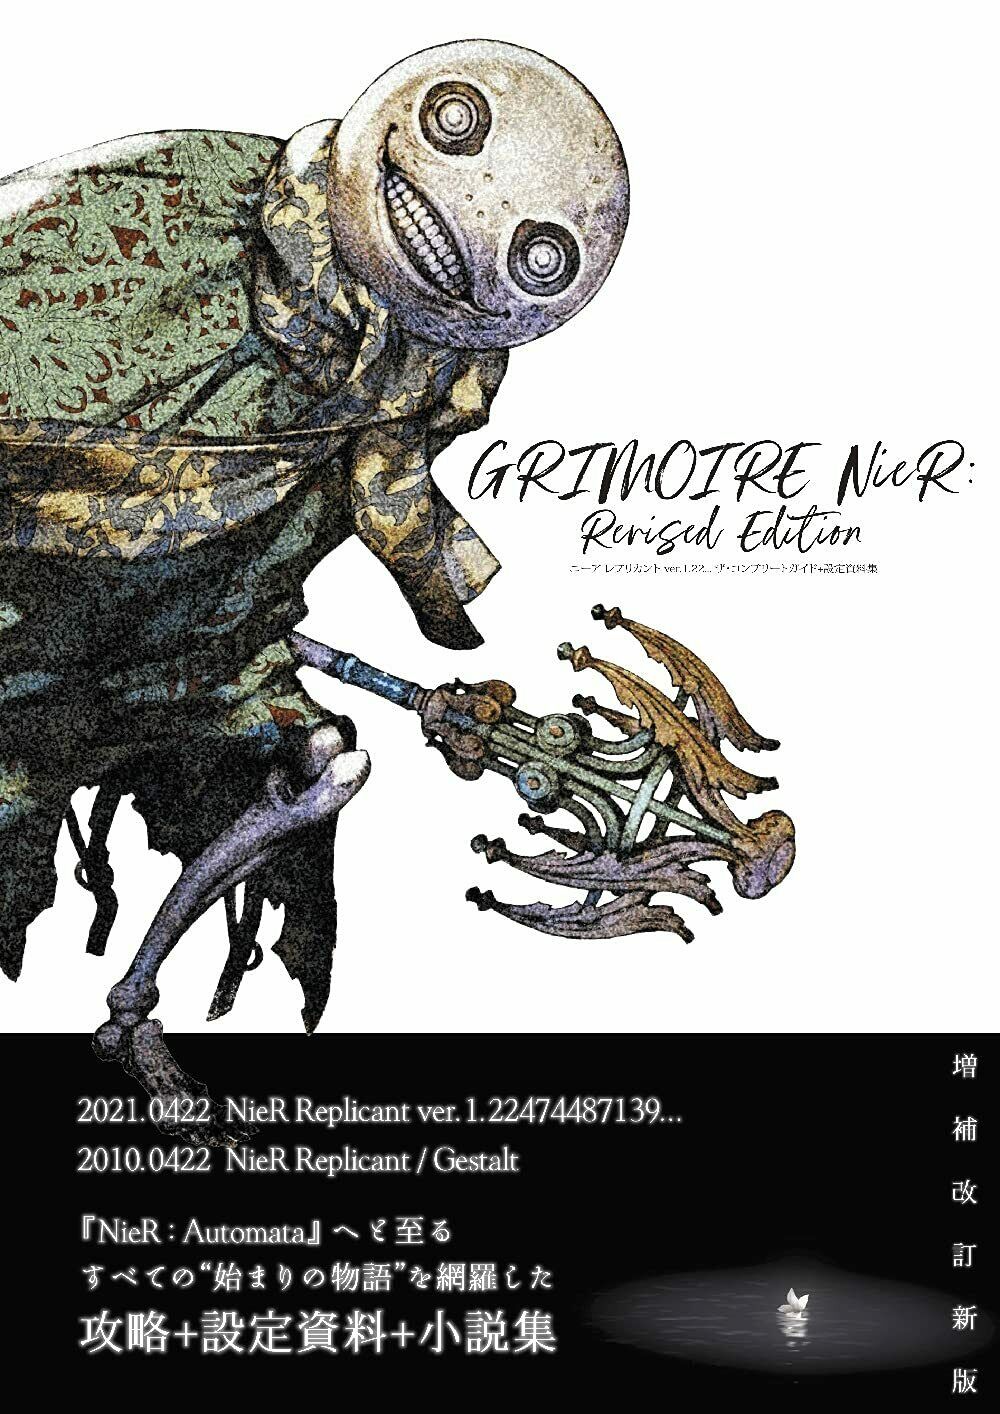 NEW' NieR Replicant ver.1.22 GRIMOIRE NieR: Revised Edition | JAPAN Art Book